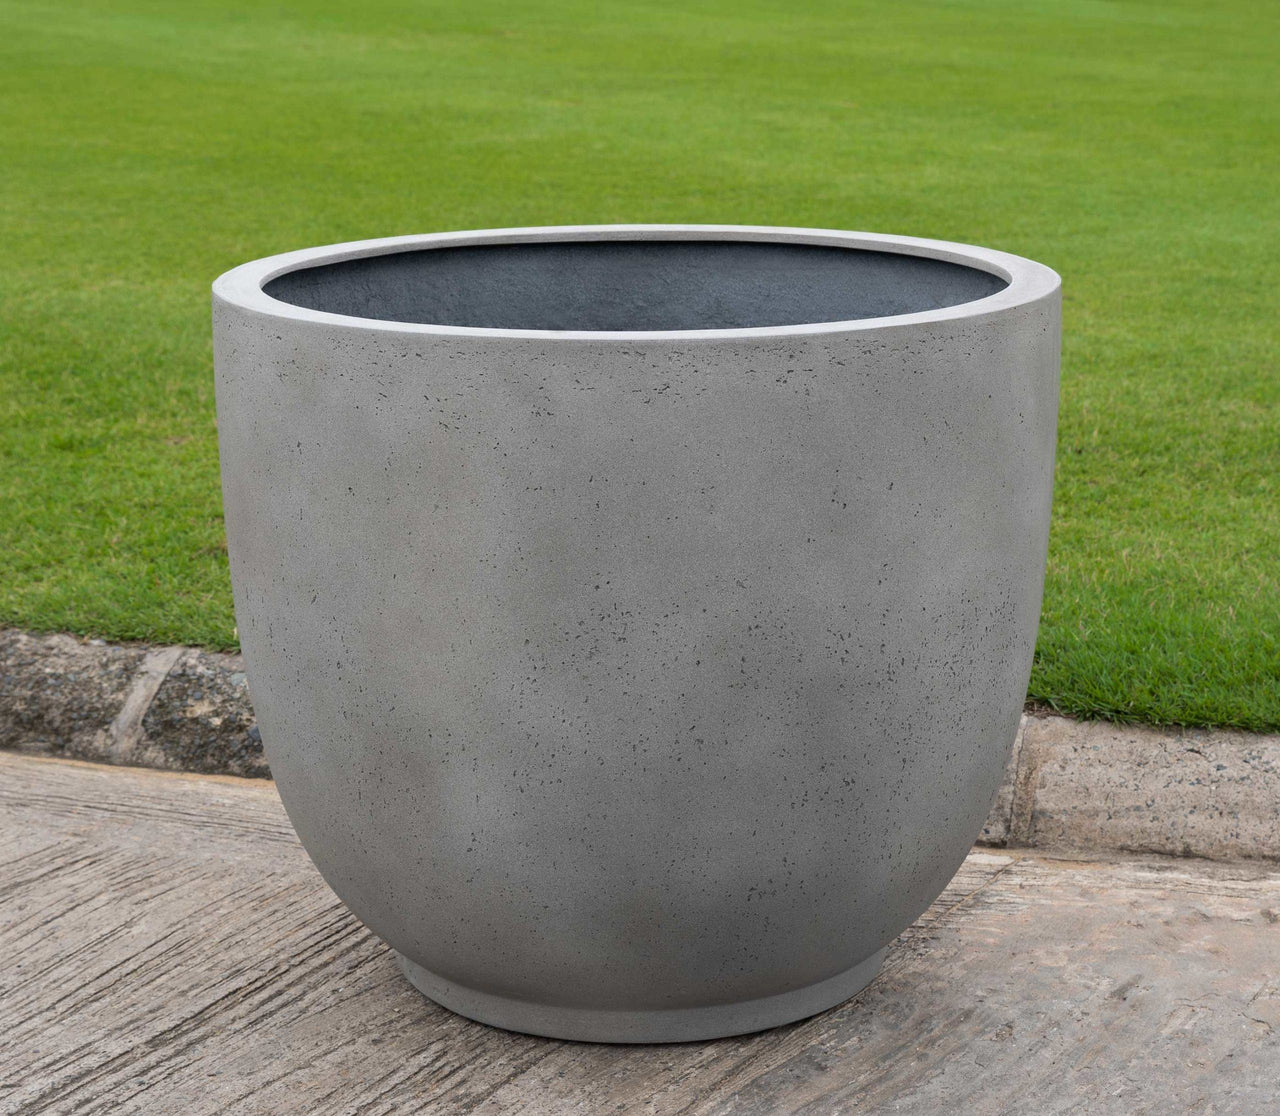 Campania International Fiber Clay Danilo Planter - (S/5) Urn/Planter Campania International Stone Grey Lite Extra Large 